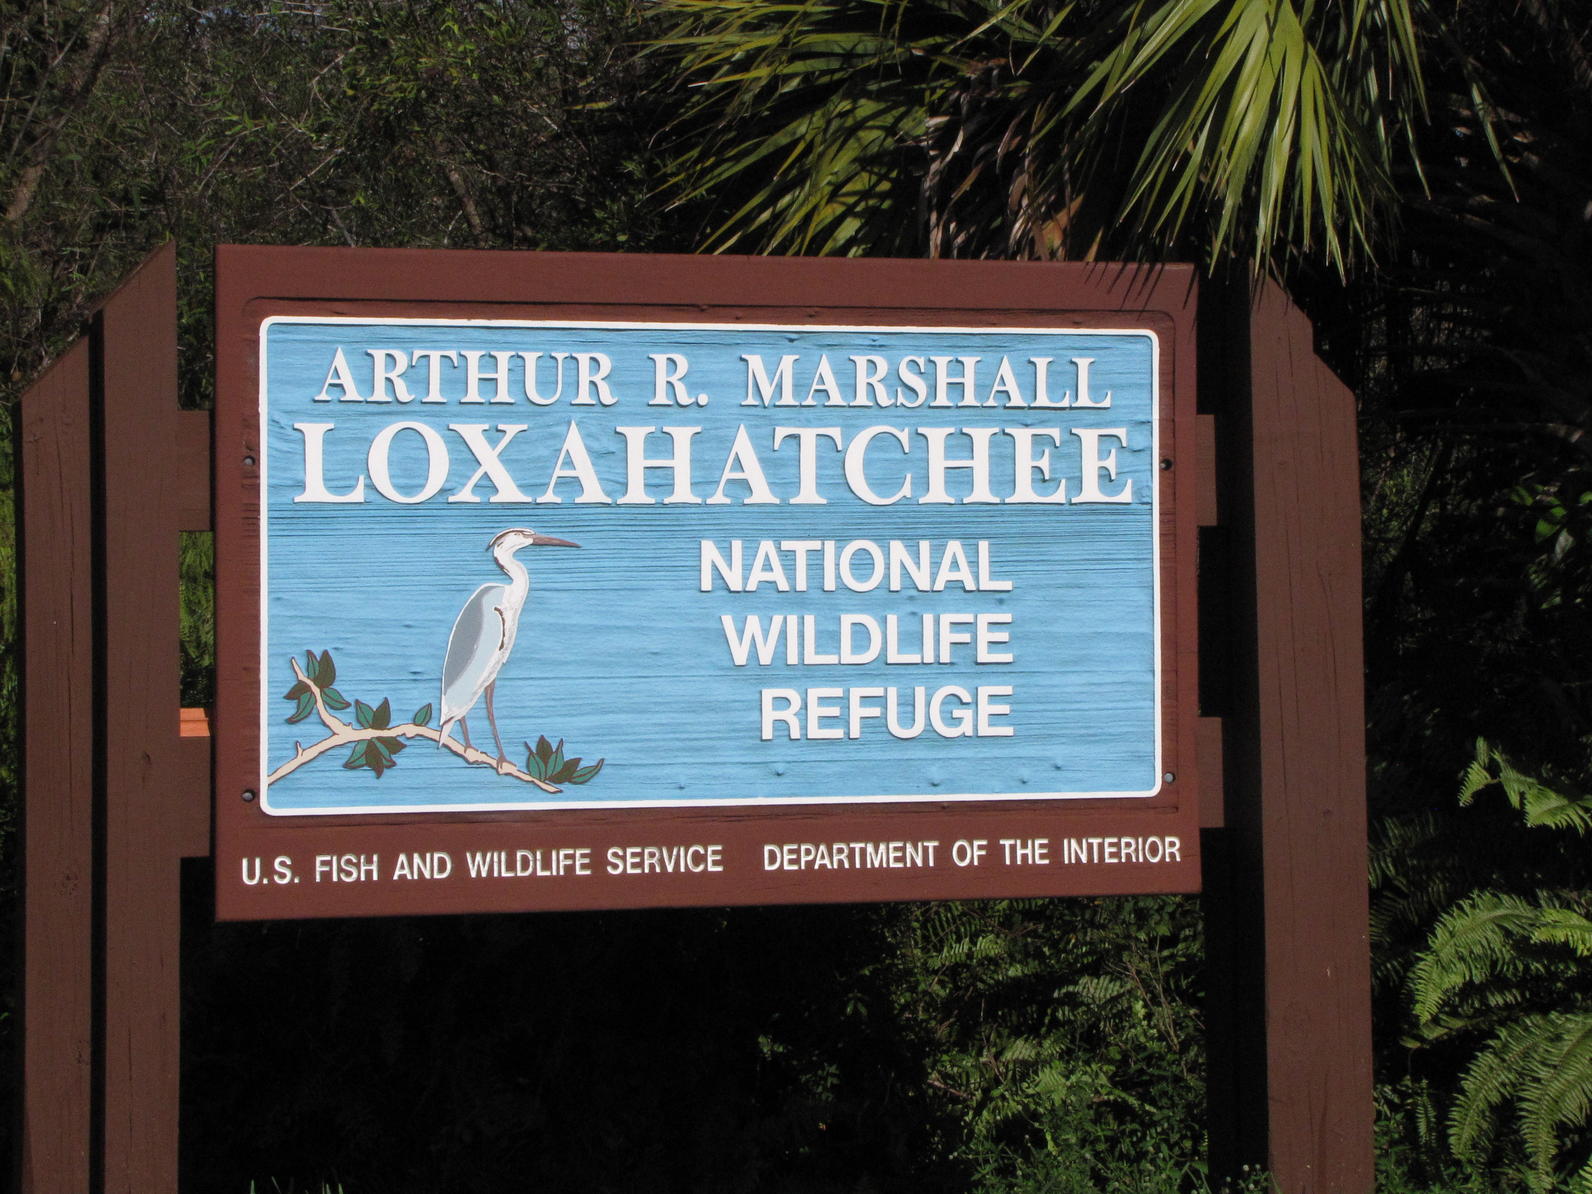 Arthur R. Marshall loxahatchee national wildlife refuge